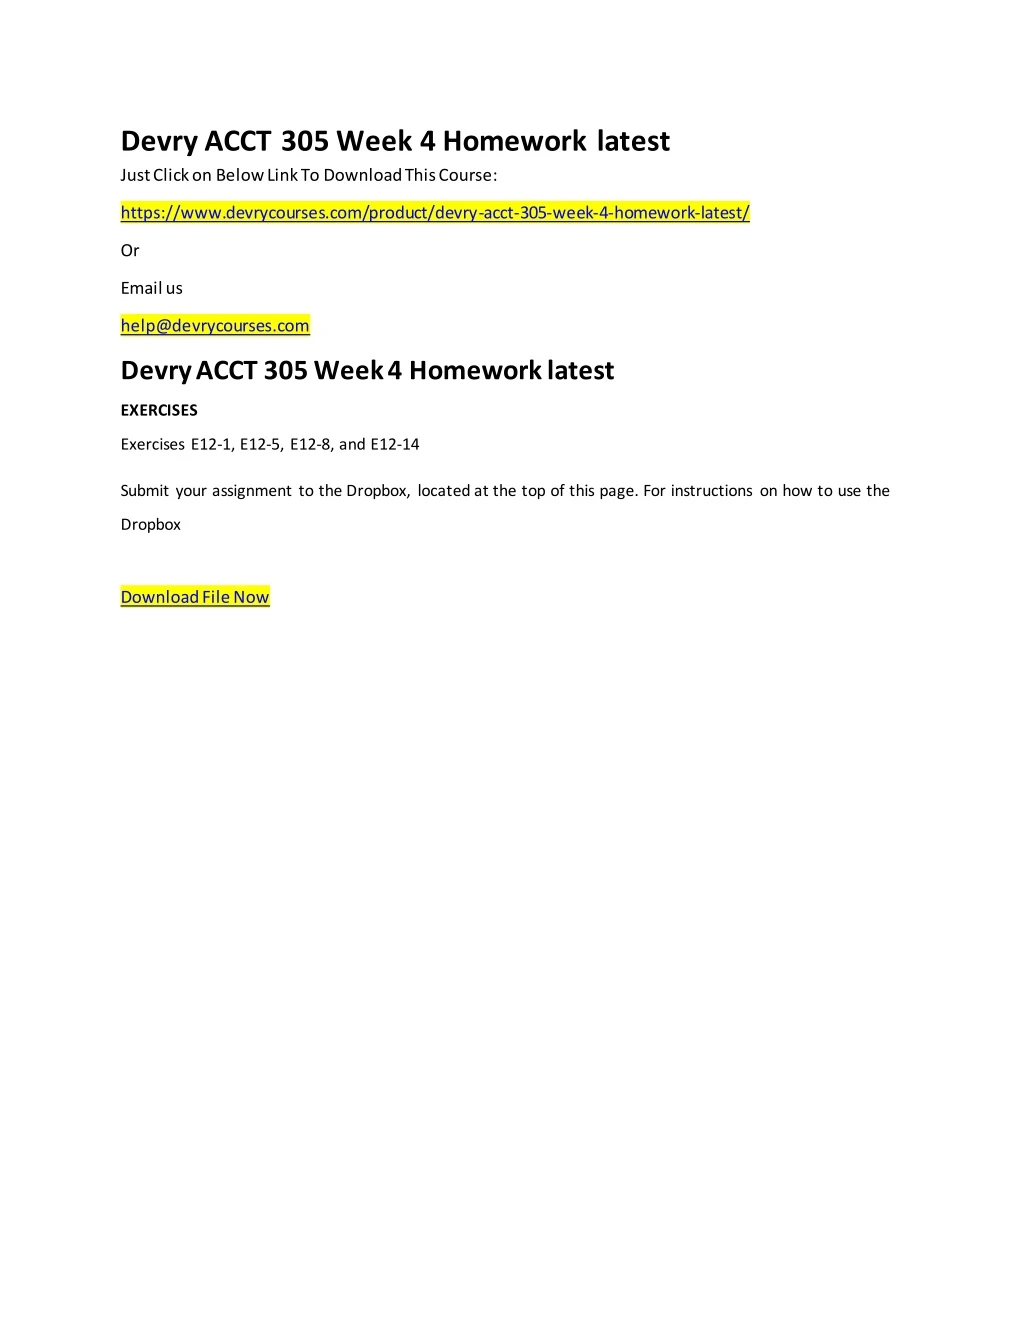 devry acct 305 week 4 homework latest just click